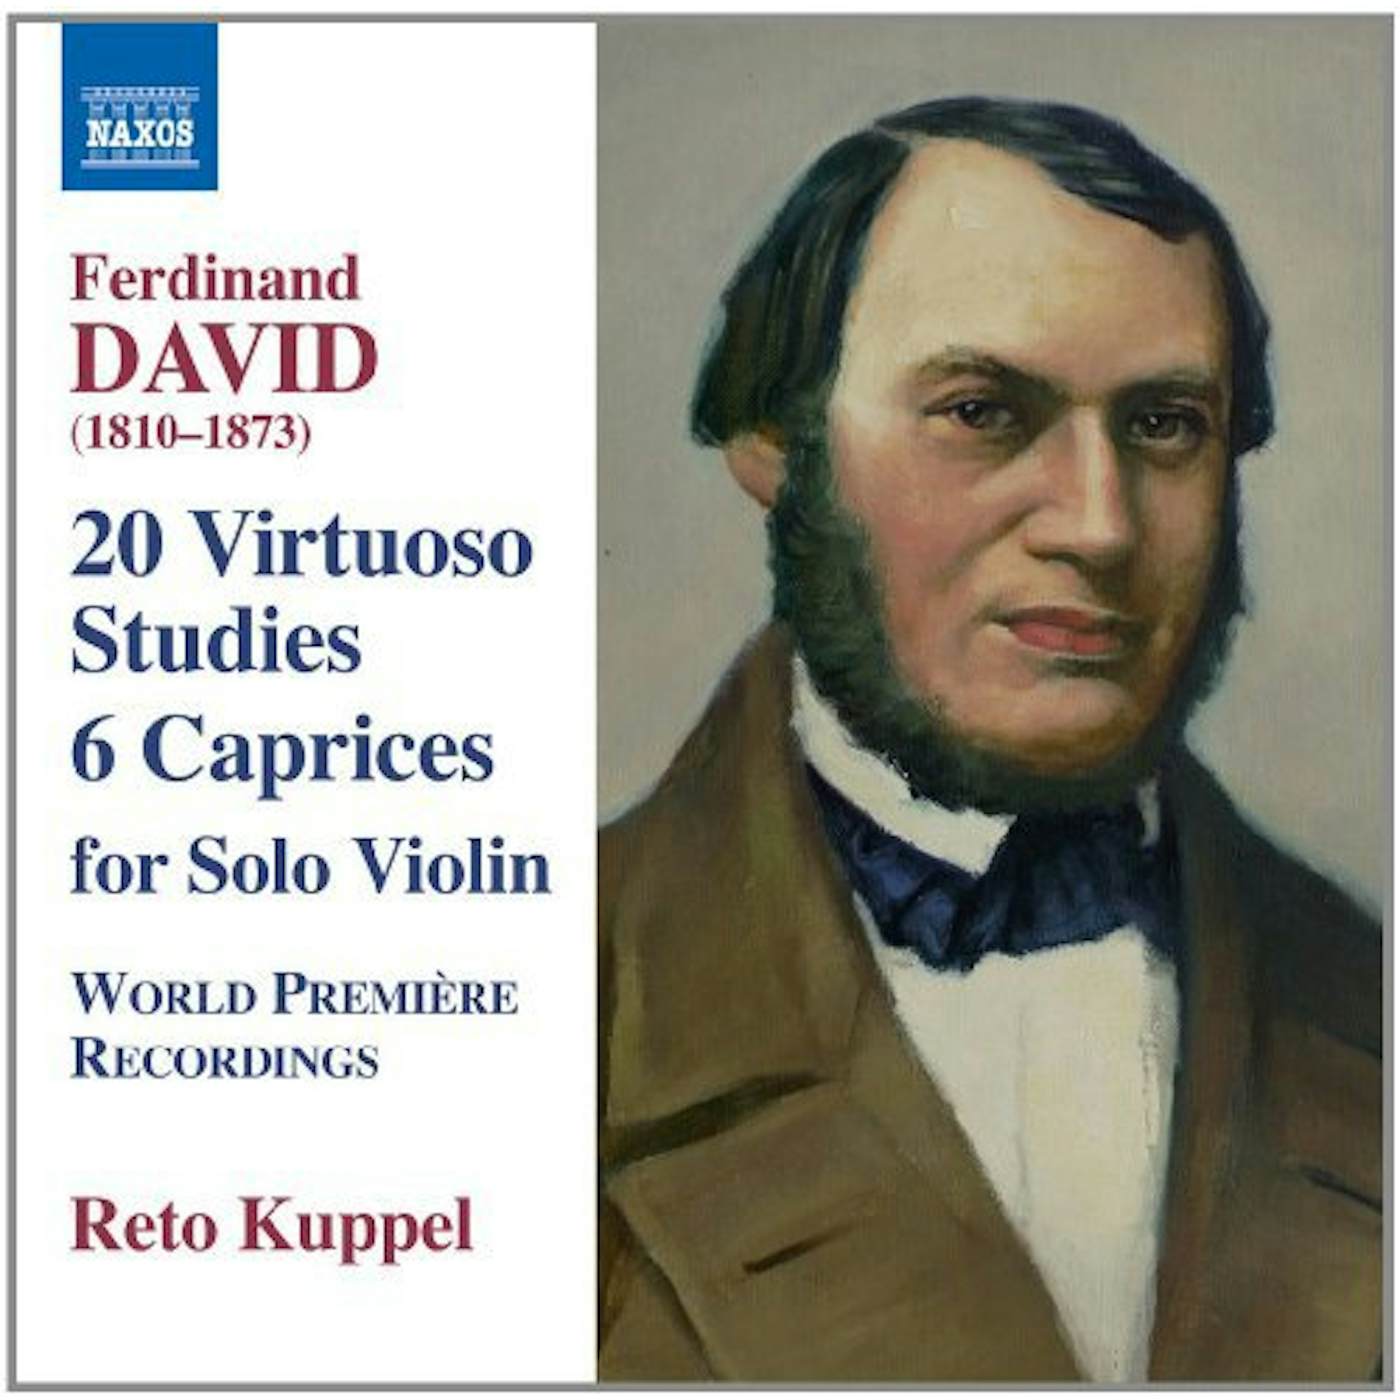 David 20 VIRTUOSO STUDIES CD